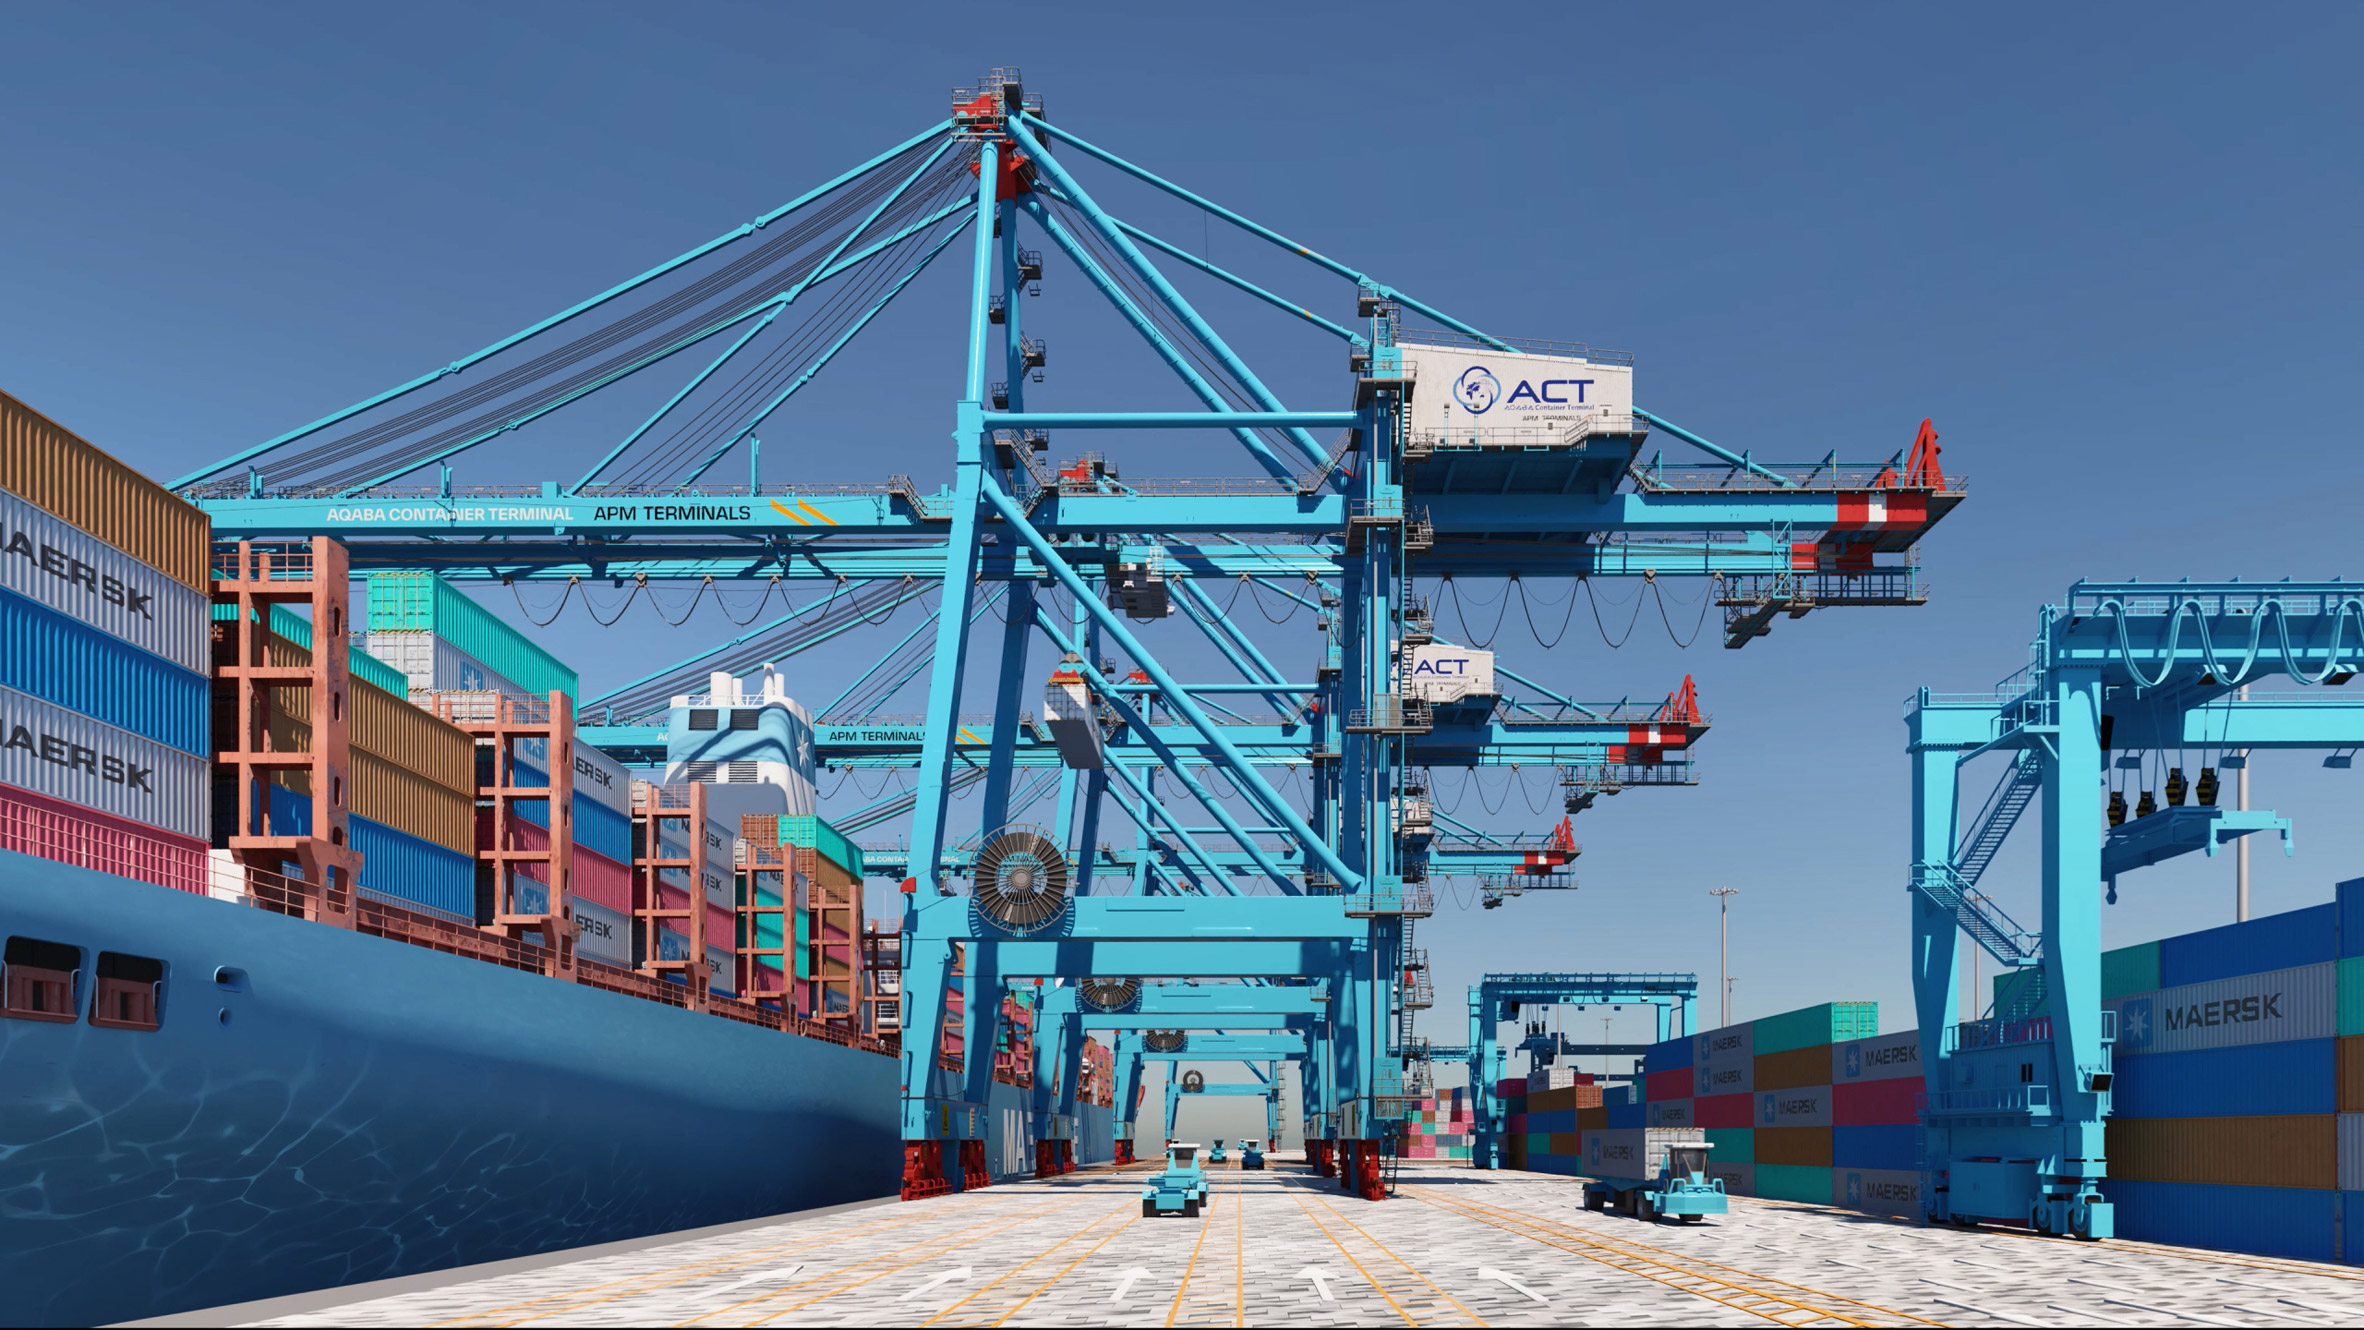 Visual of container cranes at Aqaba Container Terminal